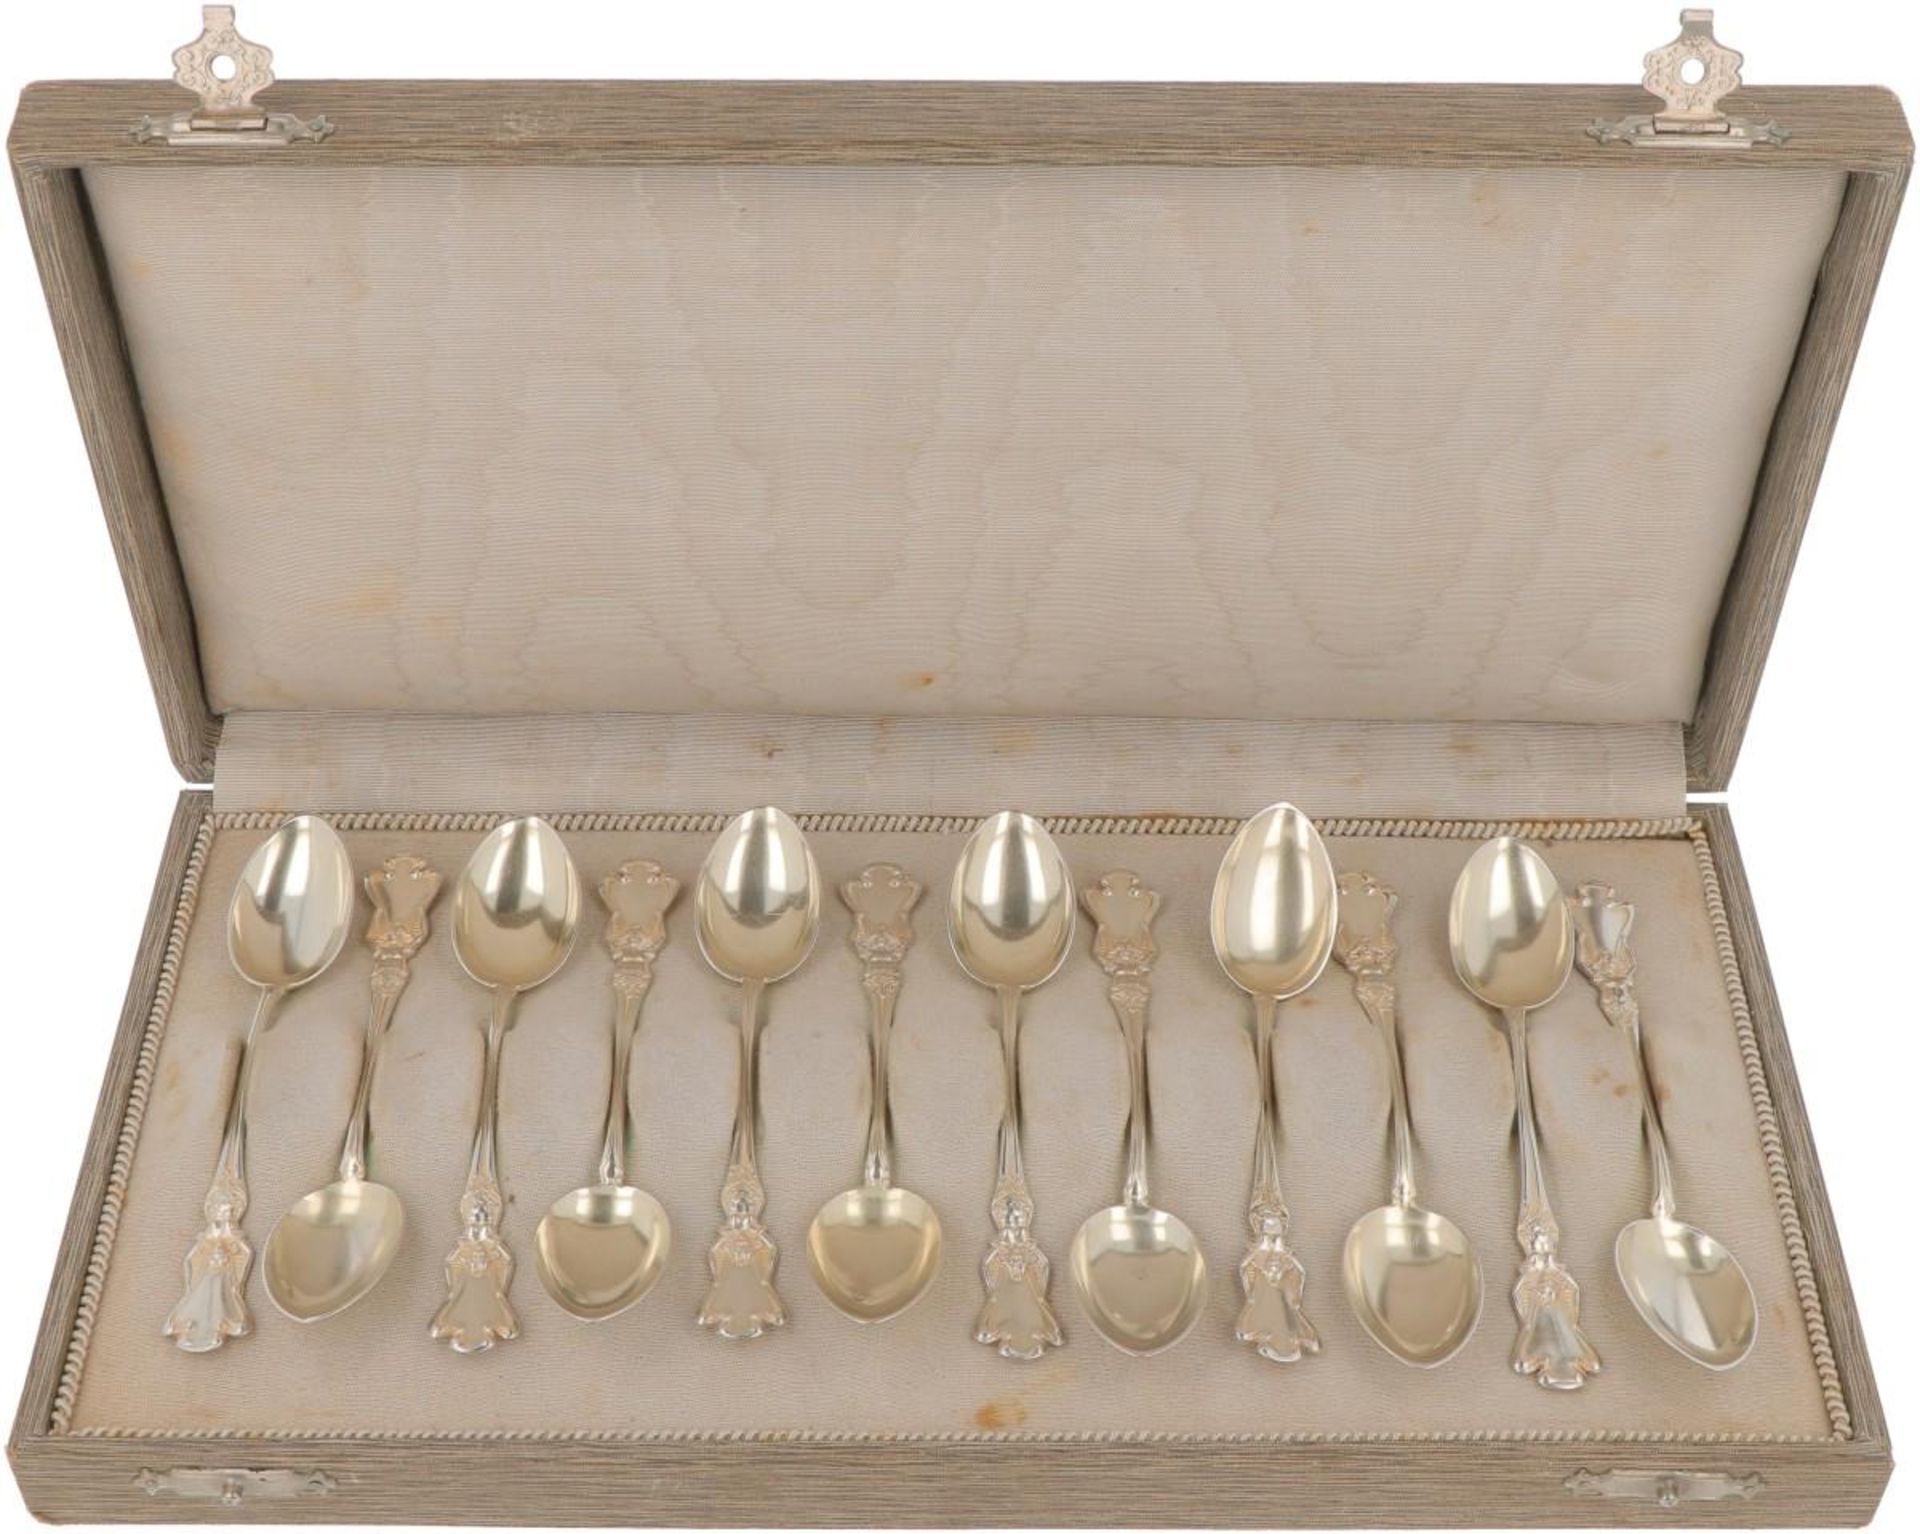 (12) piece set of silver teaspoons.